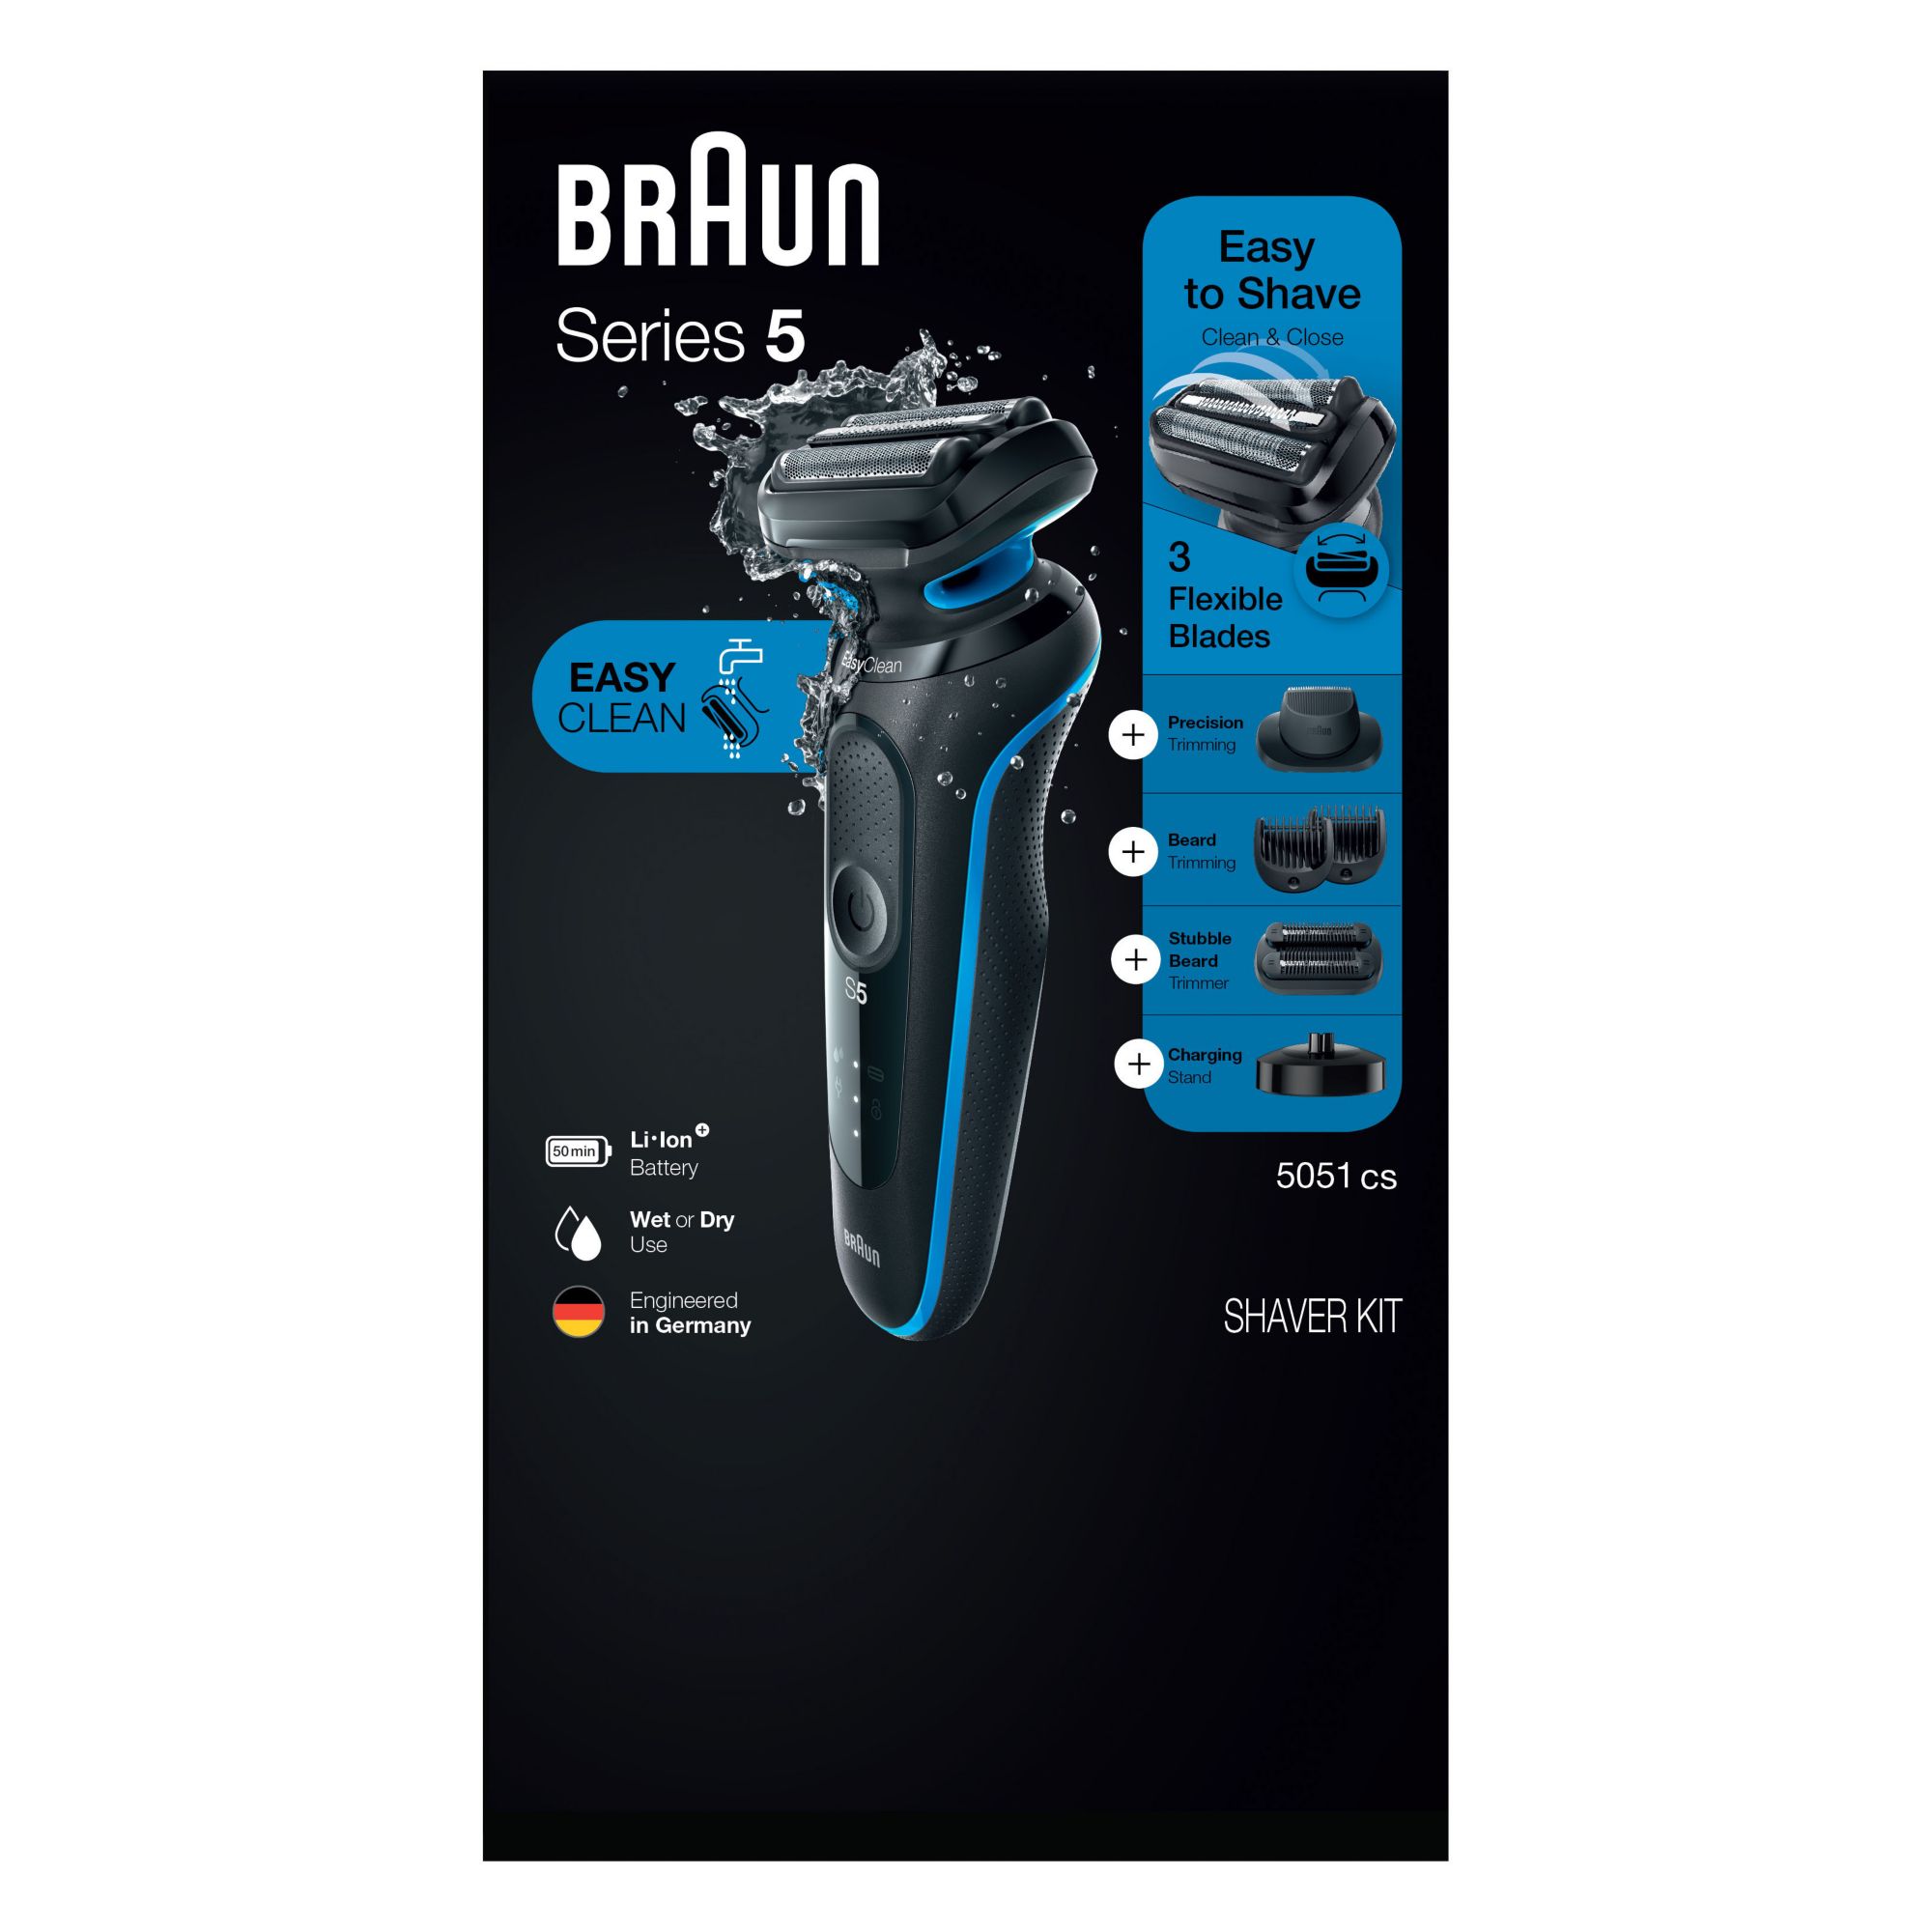 Braun Electric Shavers and Razors